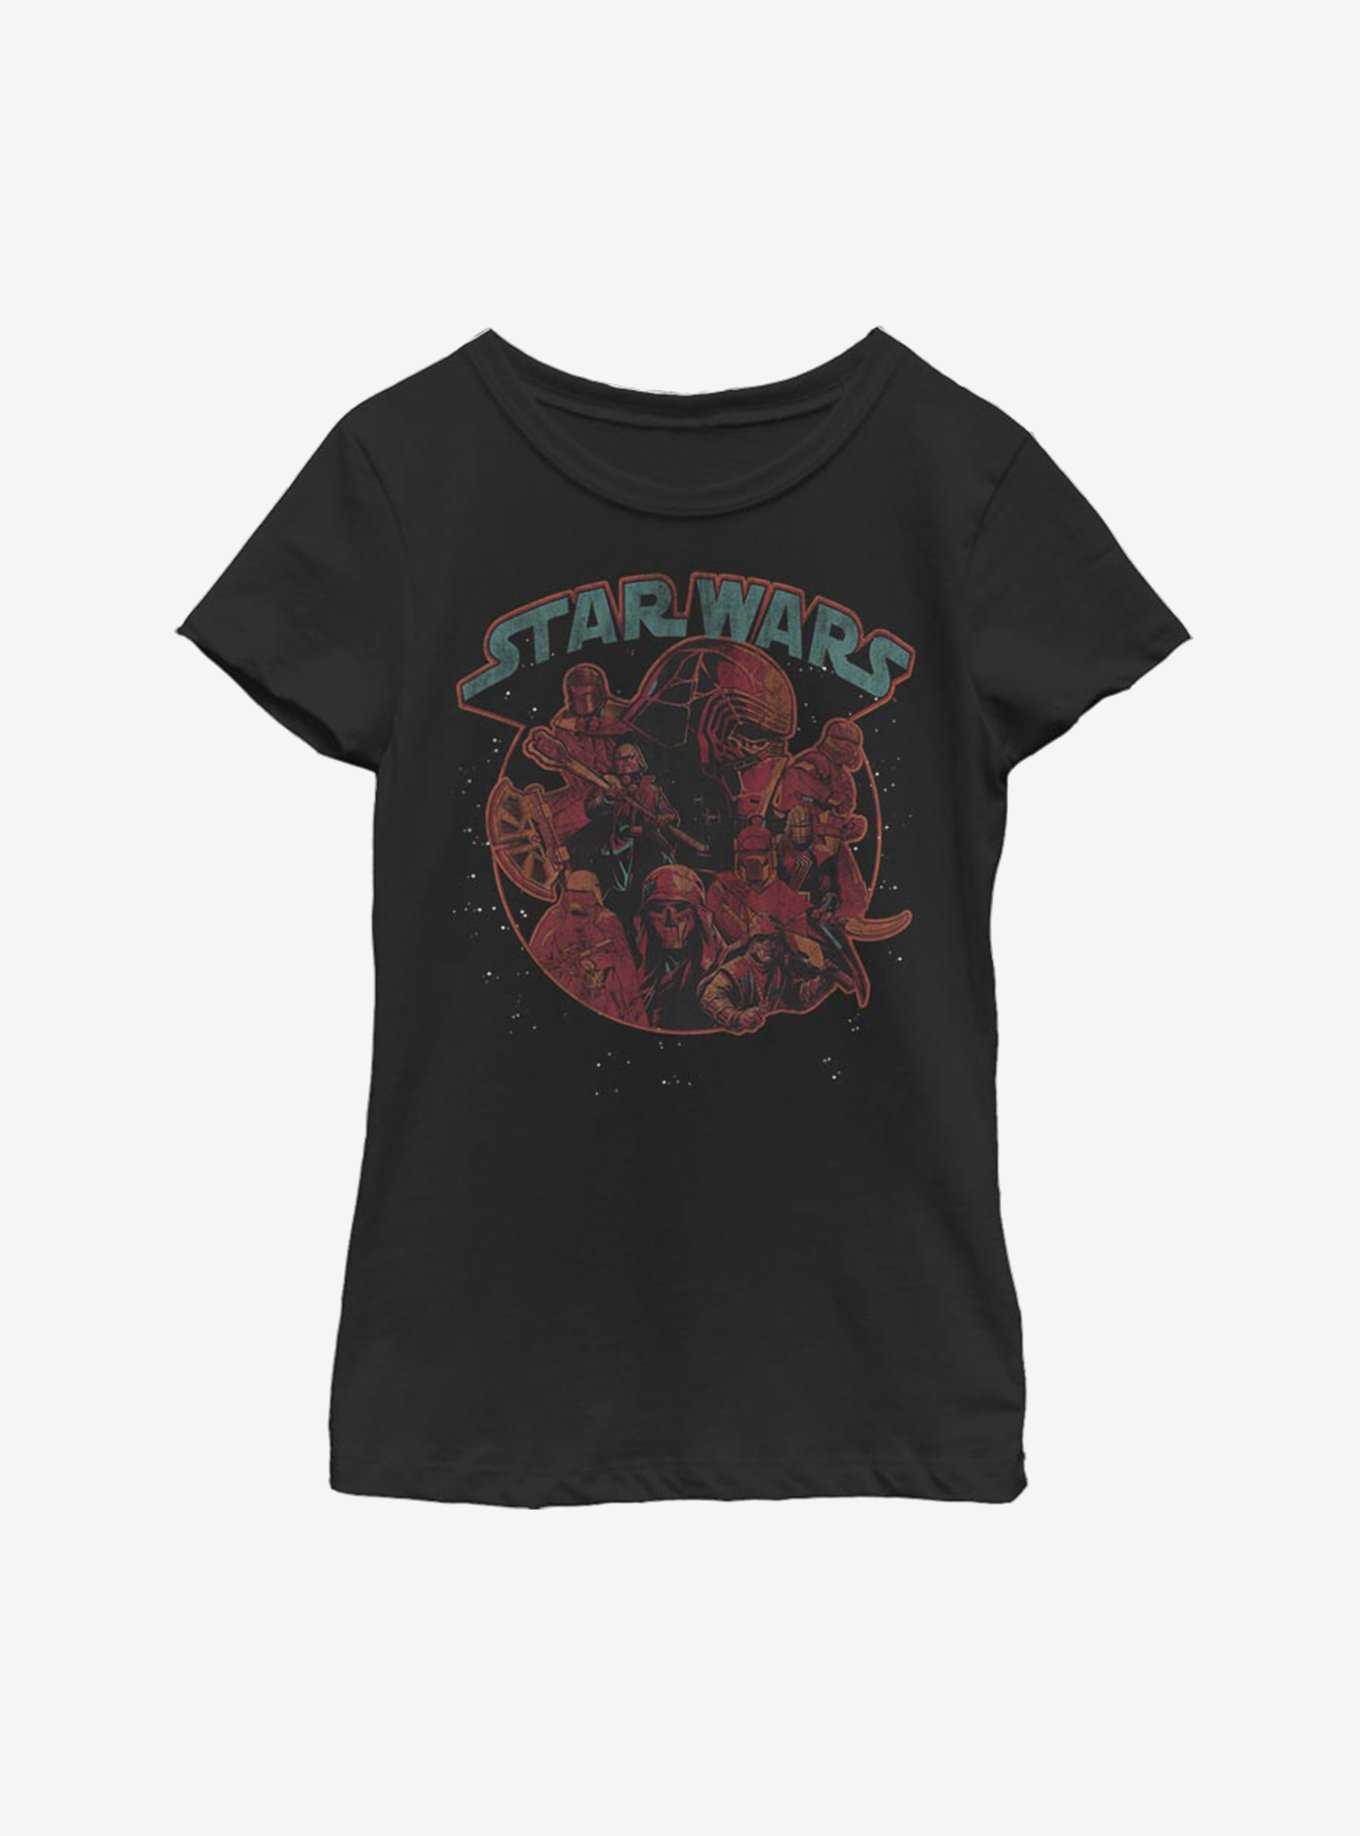 Star Wars Episode IX The Rise Of Skywalker Retro Villains Youth Girls T-Shirt, , hi-res